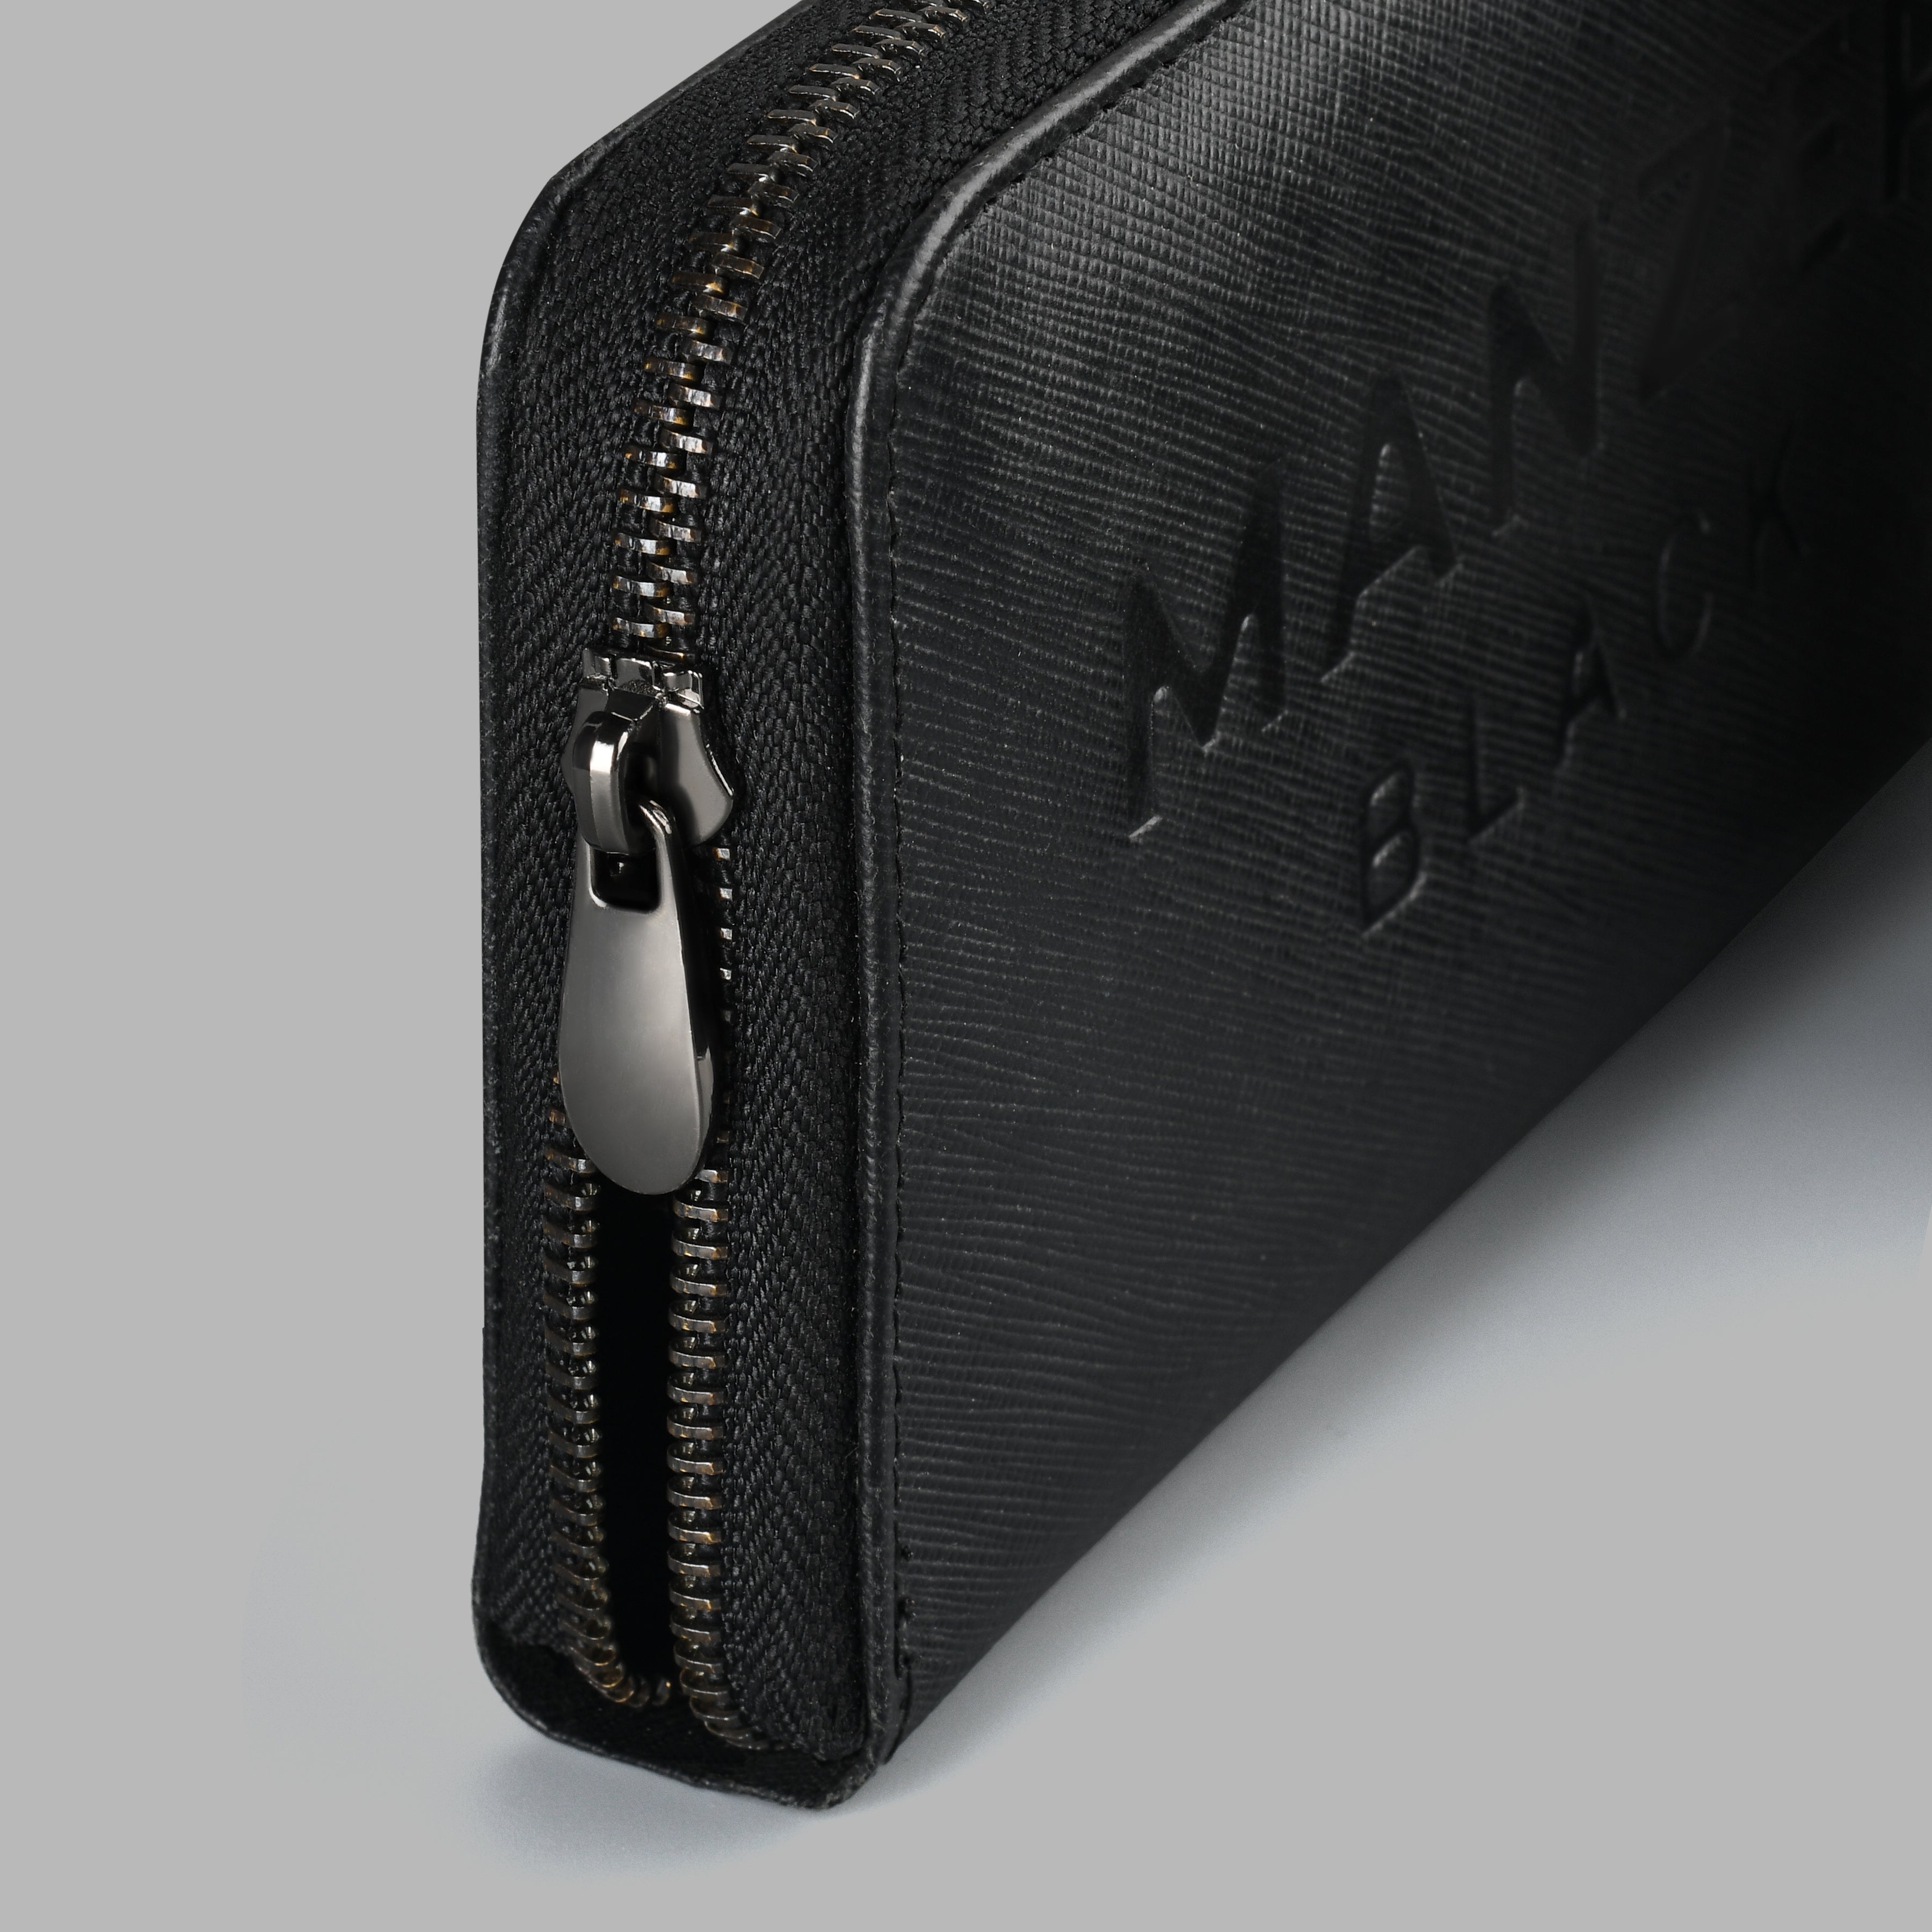 Saffinao Leather Zipper Wallet